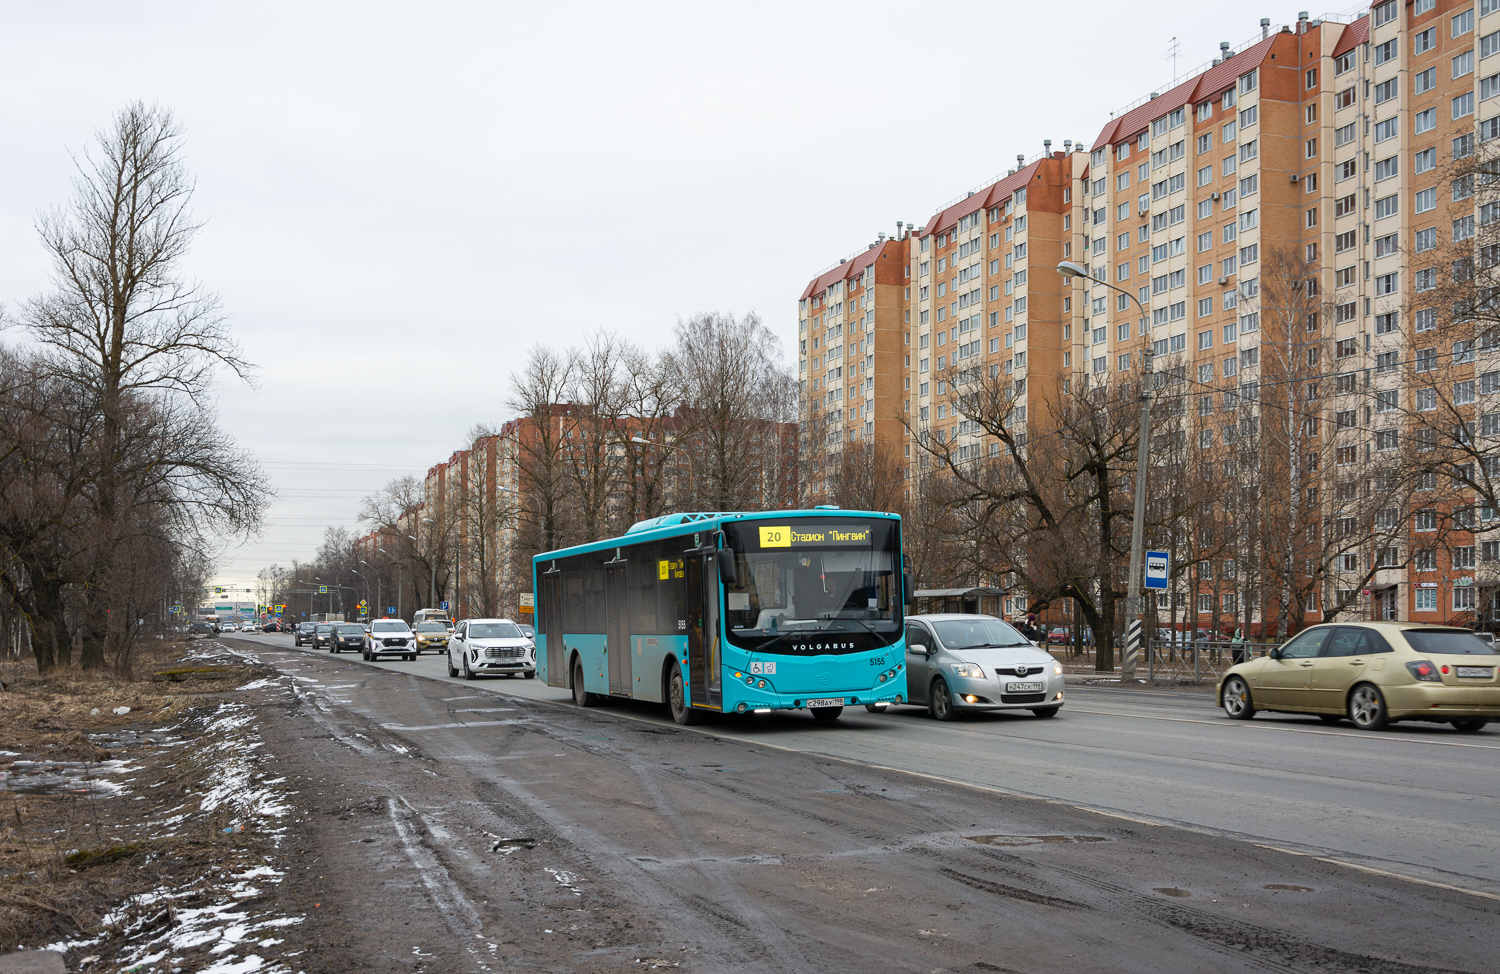 Saint Petersburg, Volgabus-5270.02 No. 5155